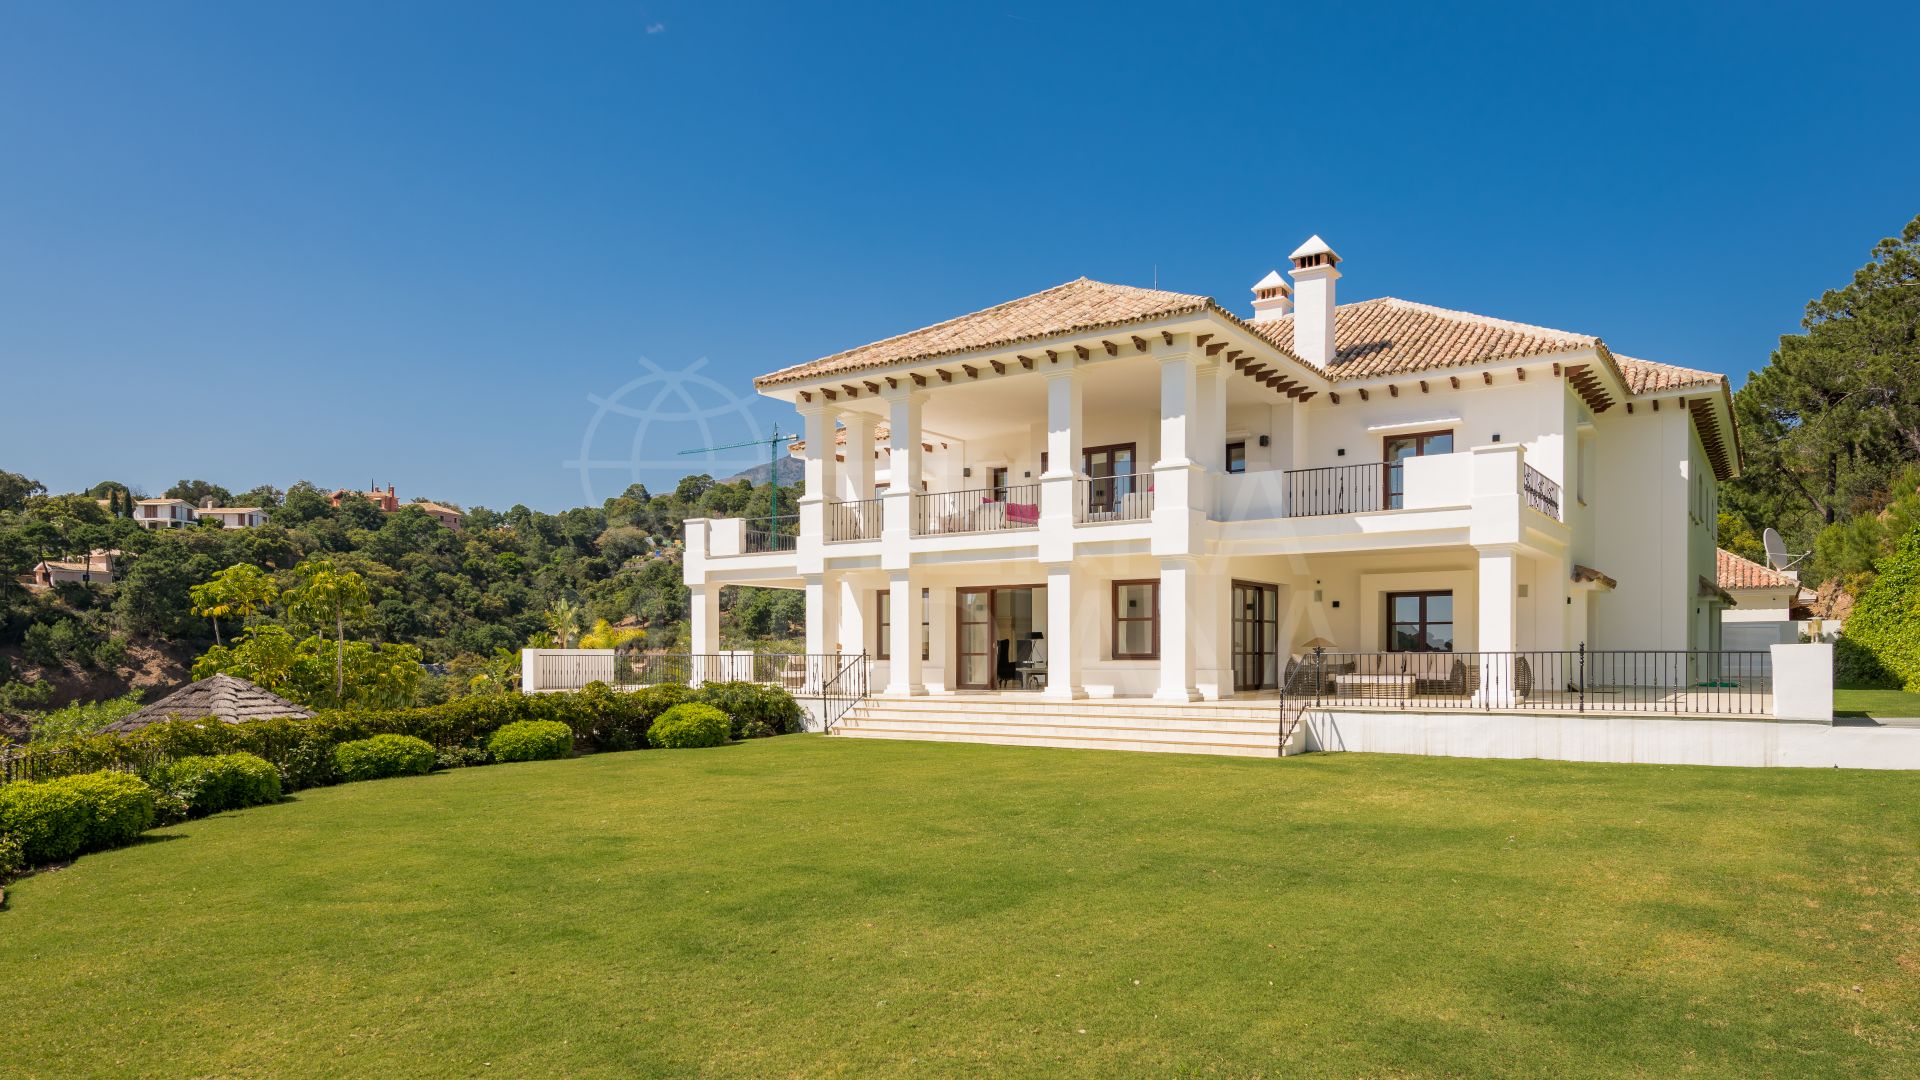 Prestigious luxury villa with indoor pool for sale in the exclusive enclave of La Zagaleta, Benahavis